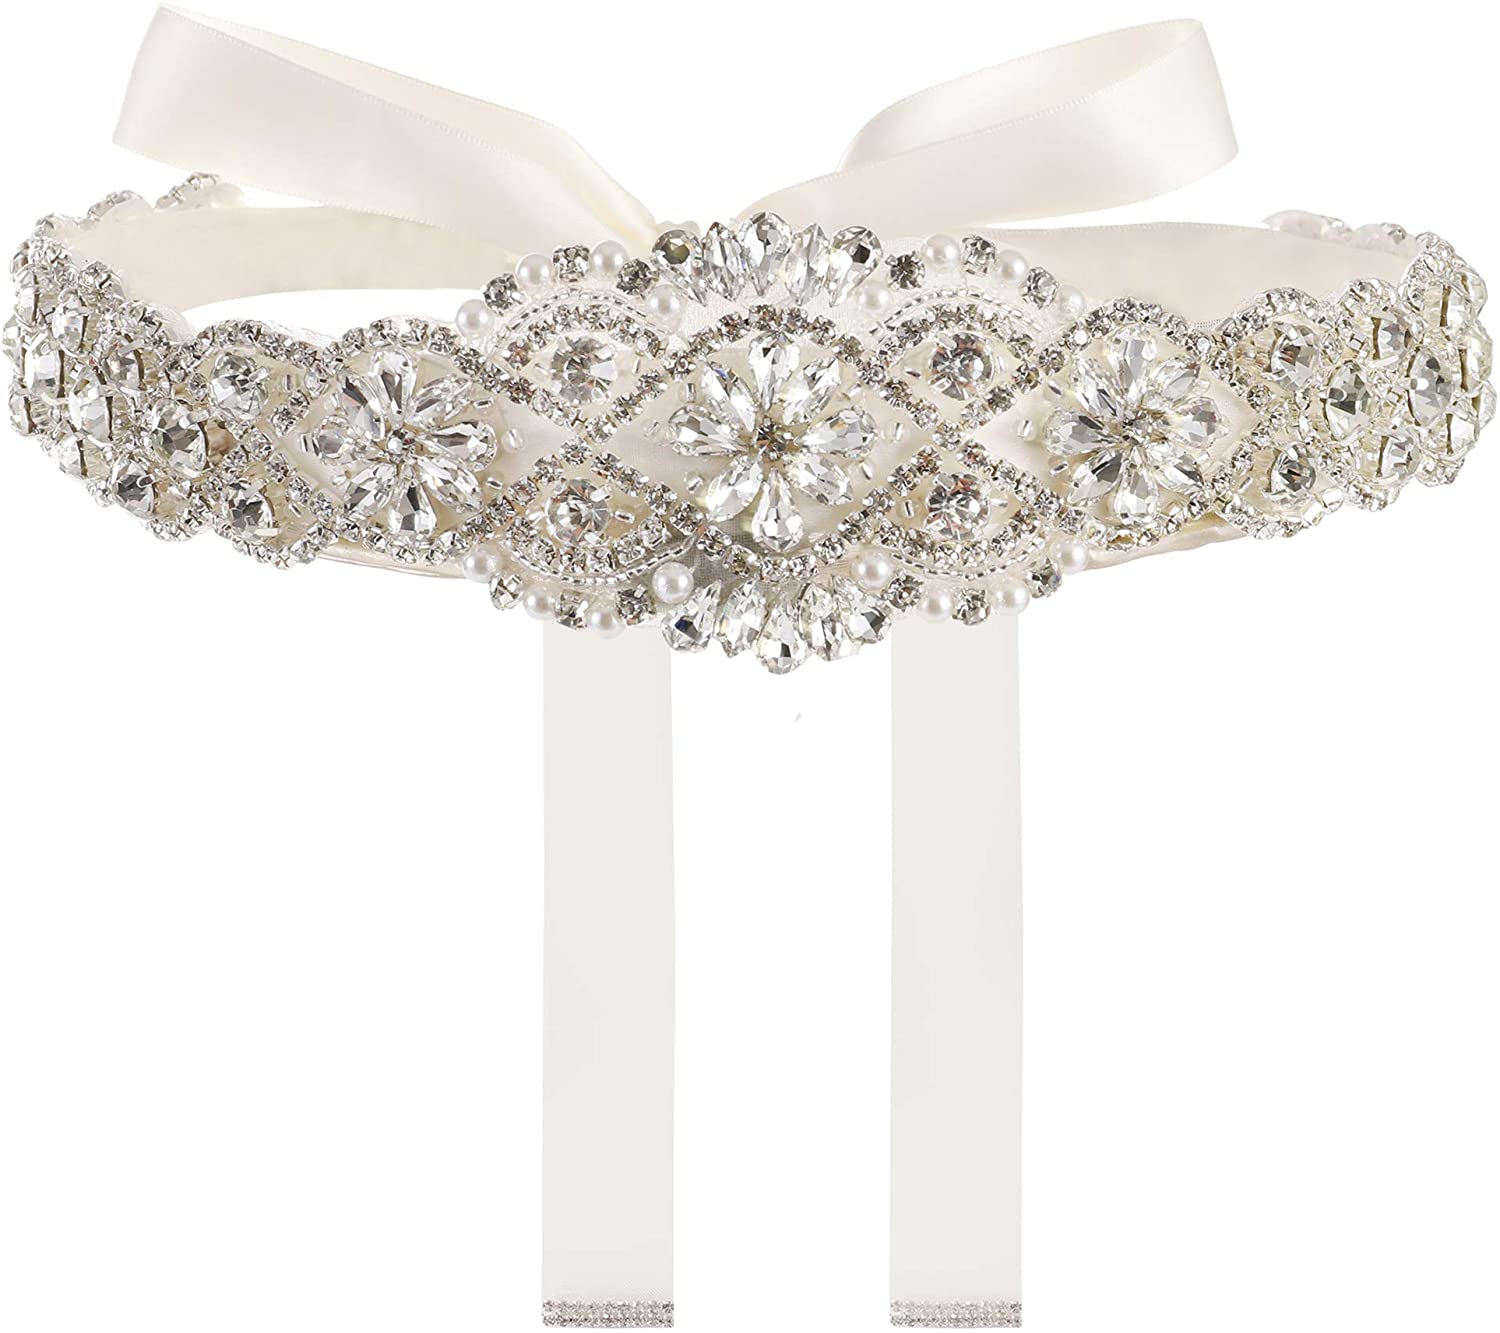 Yanstar Handmade Bridal Belt Wedding Belts Sashes Rhinestone Crystal Beads Belt For Bridal Gowns 